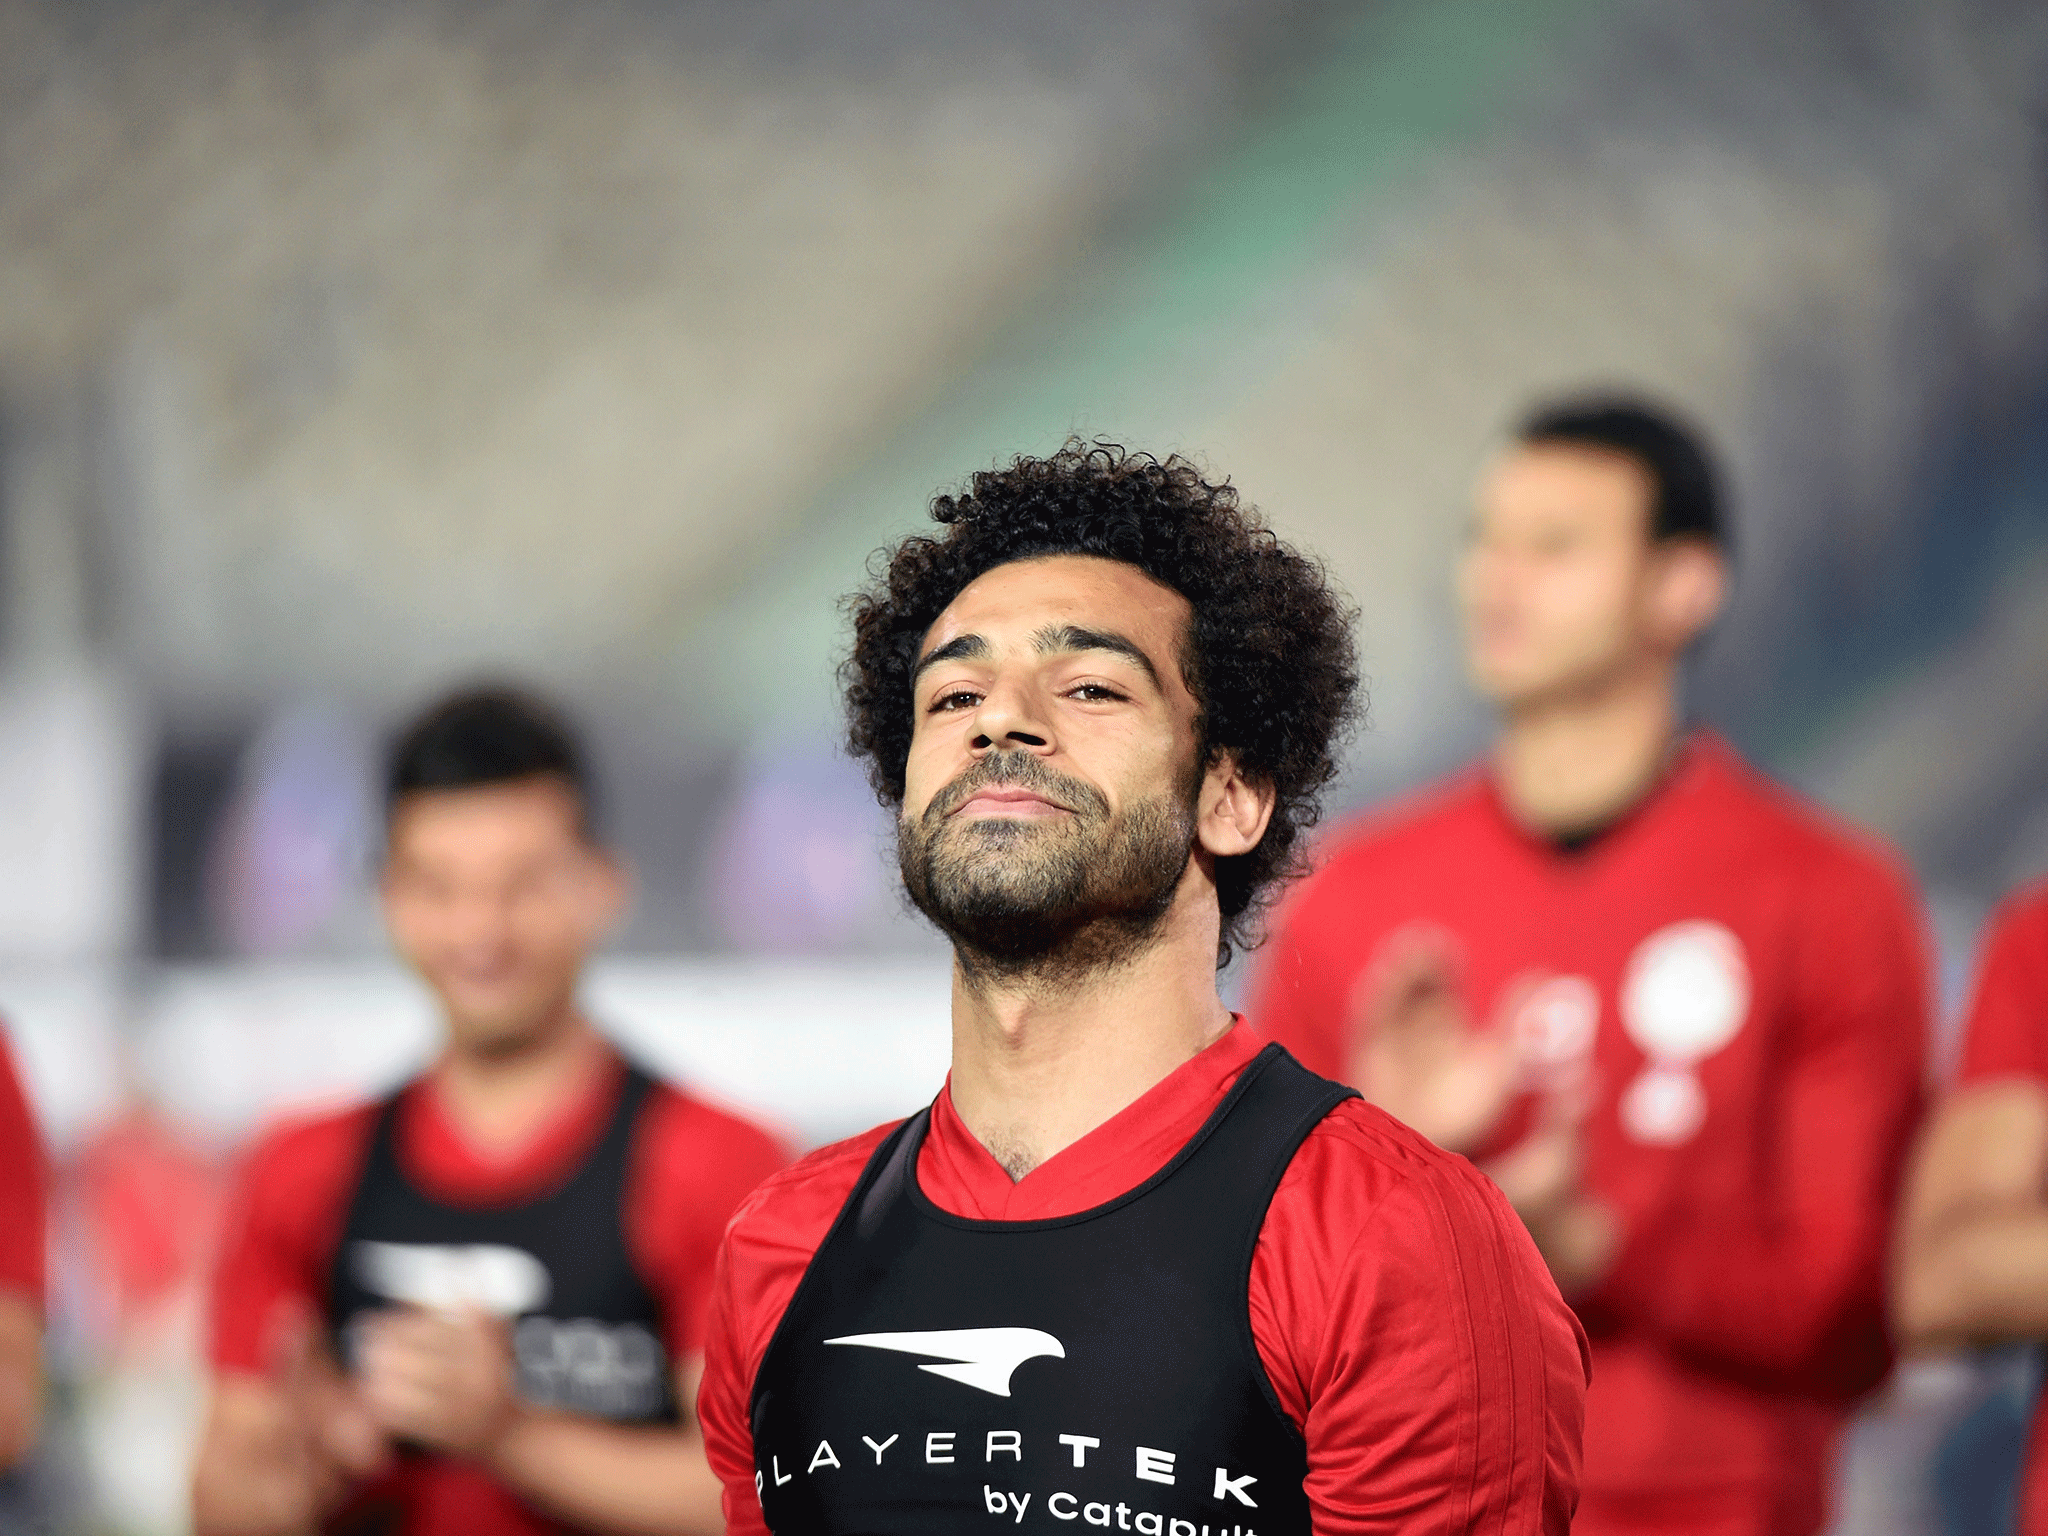 Between them, Salah, Roberto Firmino and Sadio Mane scored 91 goals in the 2017/18 season